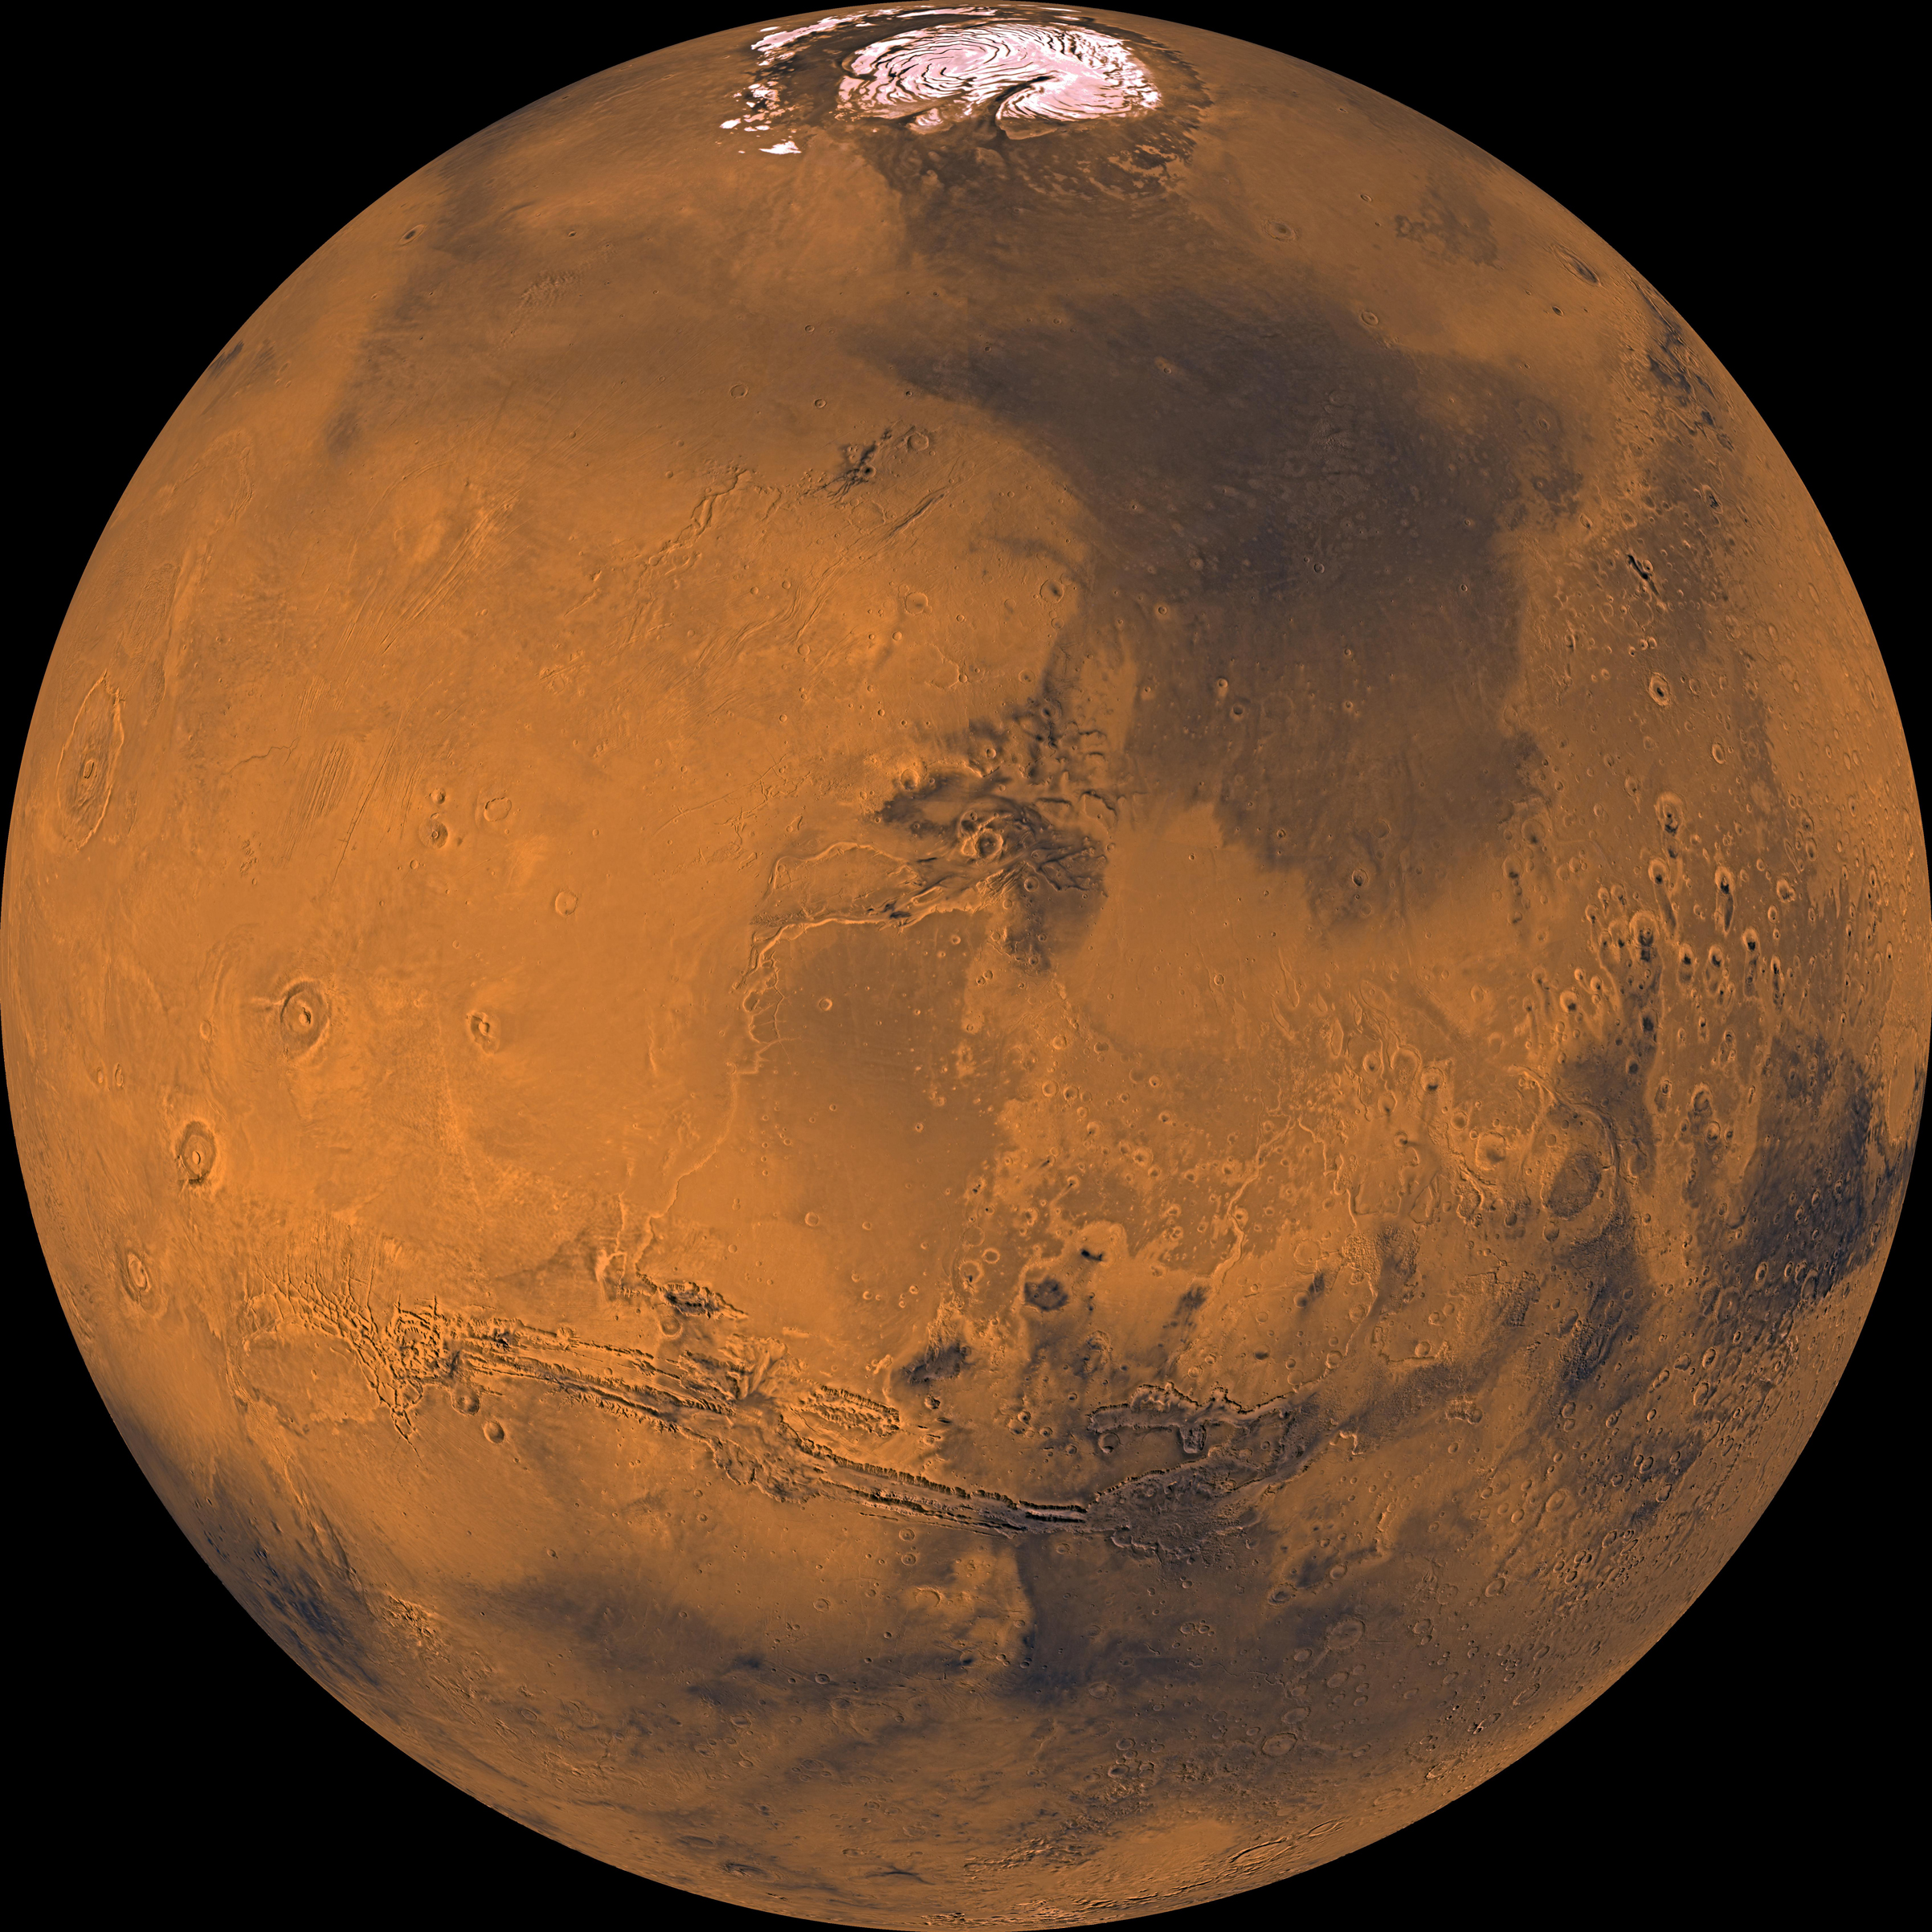 Keeping its secrets: The riddle of Martian life remains unanswered ((NASA/JPL))